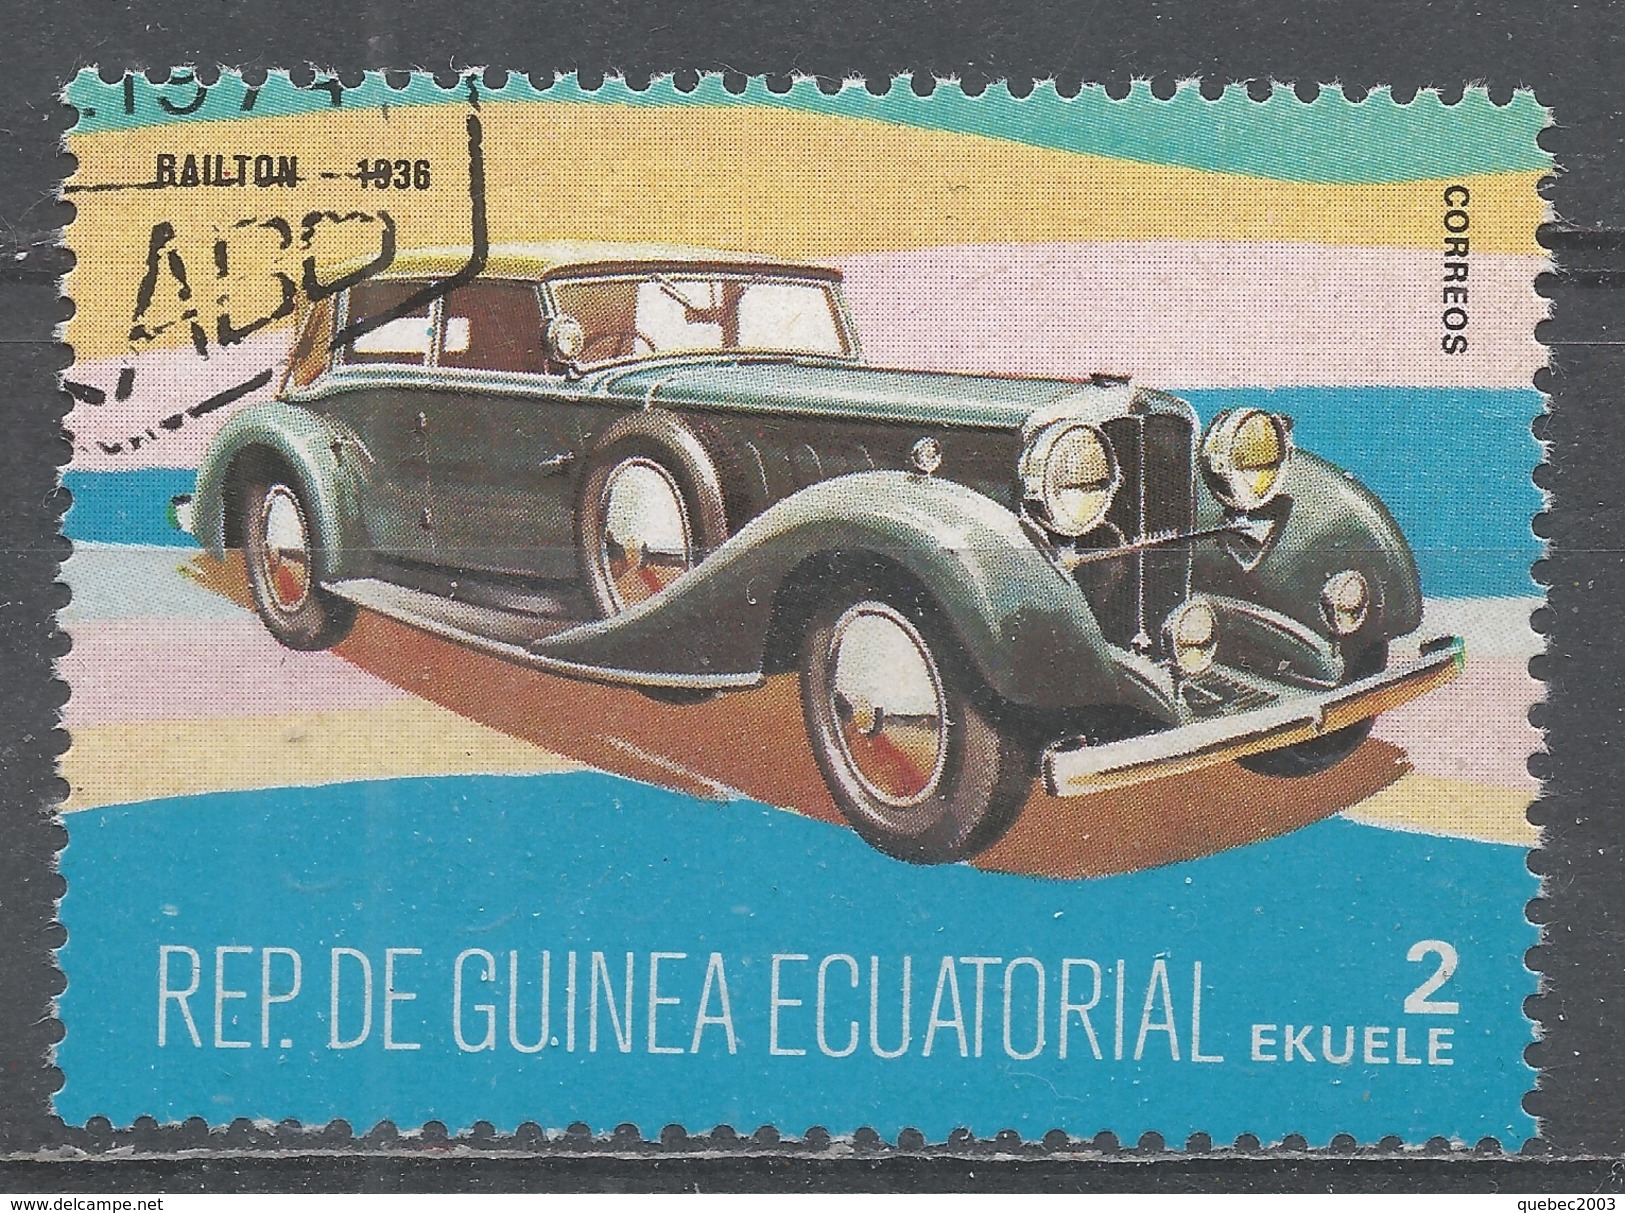 Equatorial Guinea 1974. #Aut11 (U) Automobile, Railton, 1936 - Guinée Equatoriale